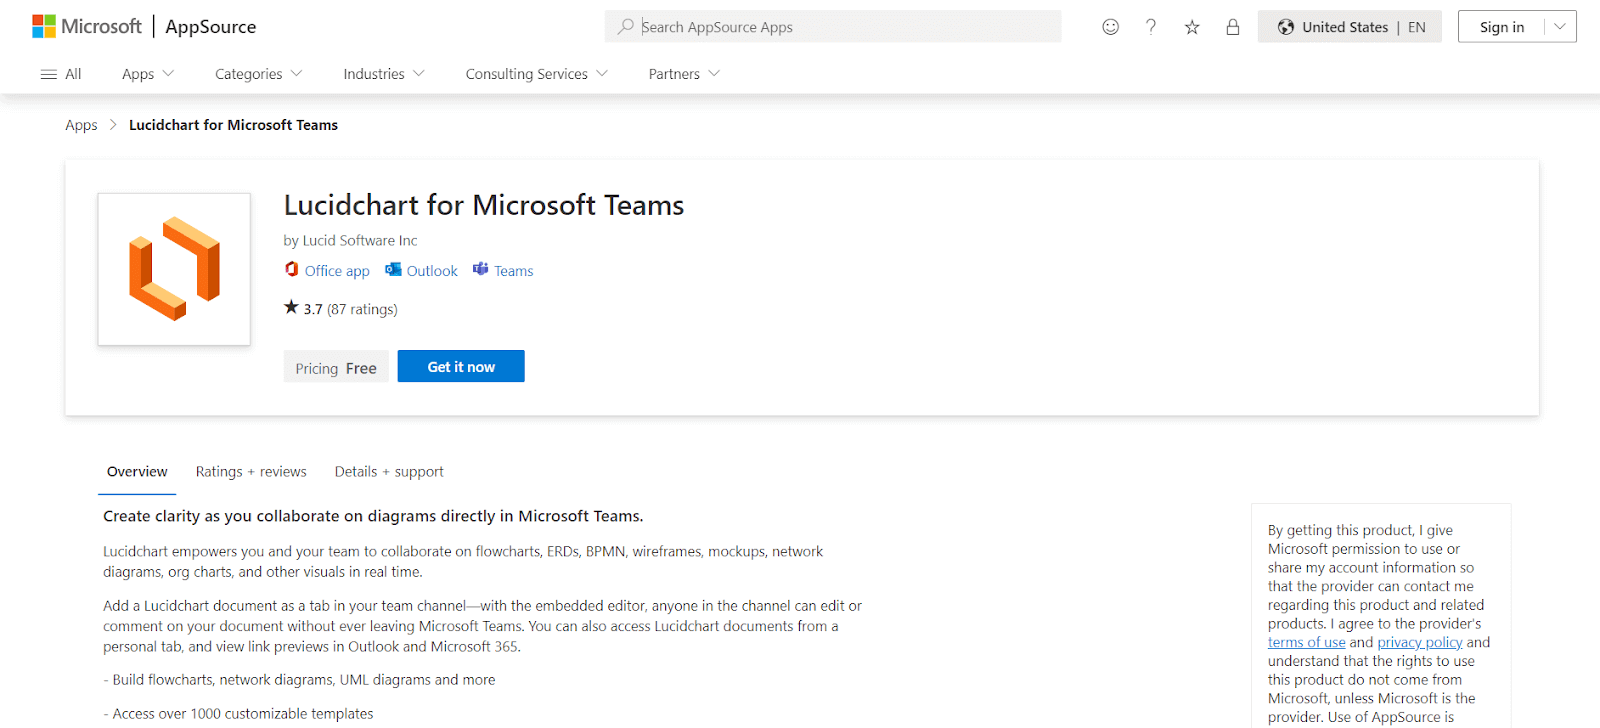 Lucidchart for Microsoft Teams